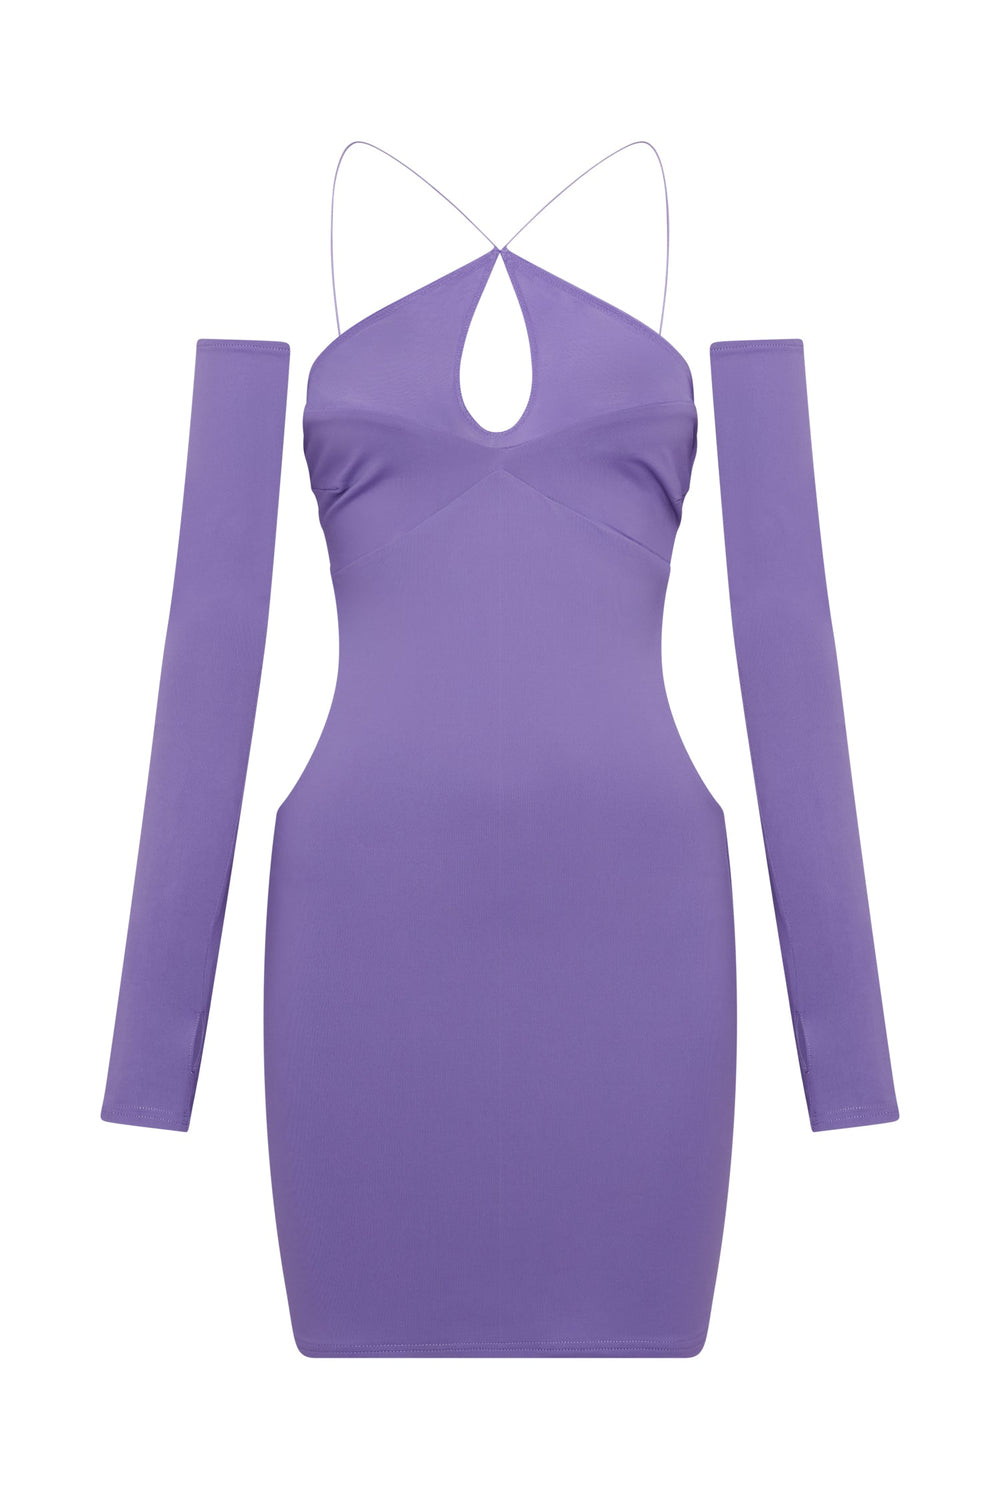 Maddy Mini Triangle Cut Out Dress - Purple